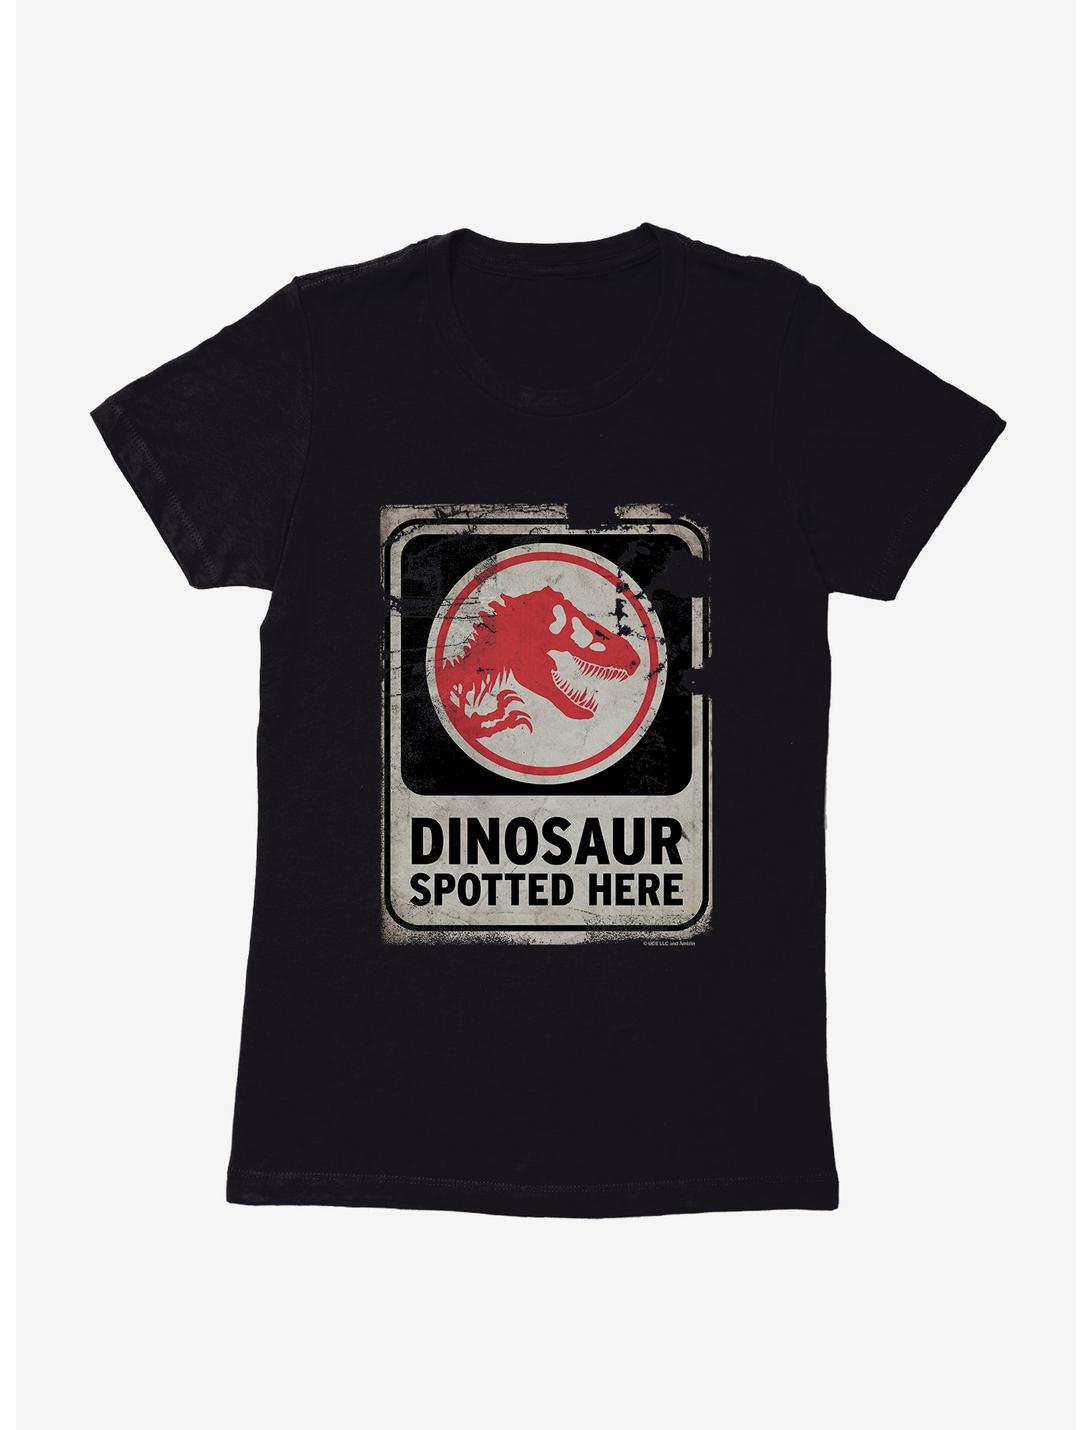 Jurassic World Dominion Dinosaur Spotted Here Womens T-Shirt, , hi-res